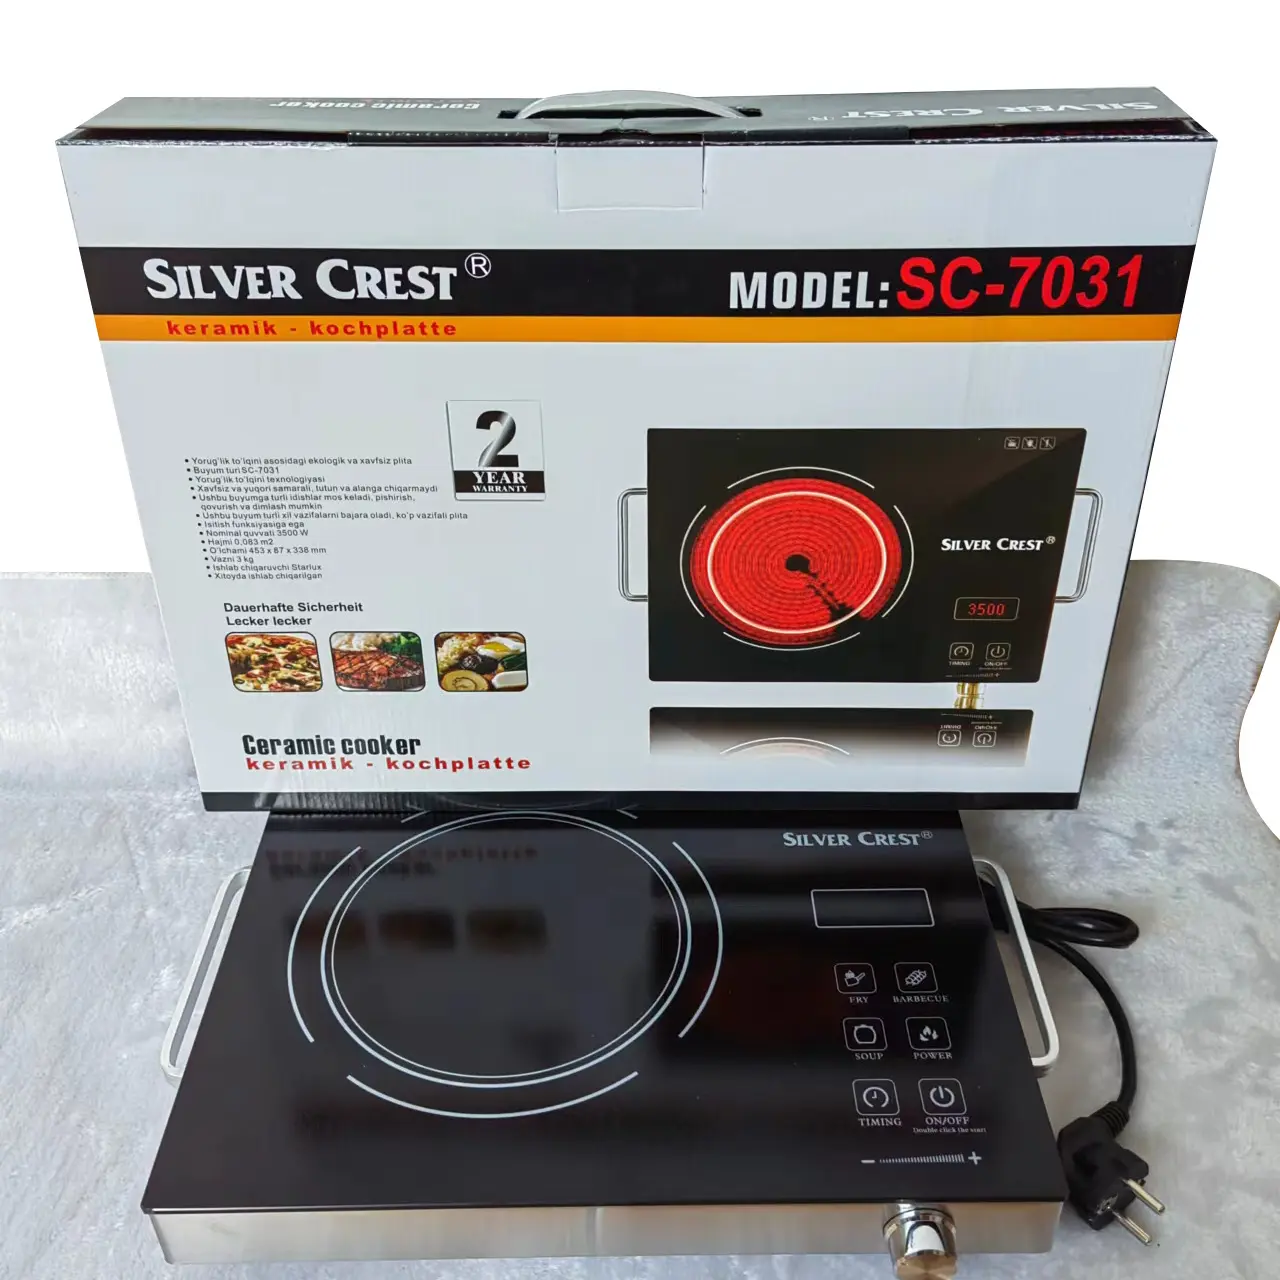 Silver crest Amazon best seller cooker induction cooker Multi hobs burners cooktops digital smart multi-function infrared cooker